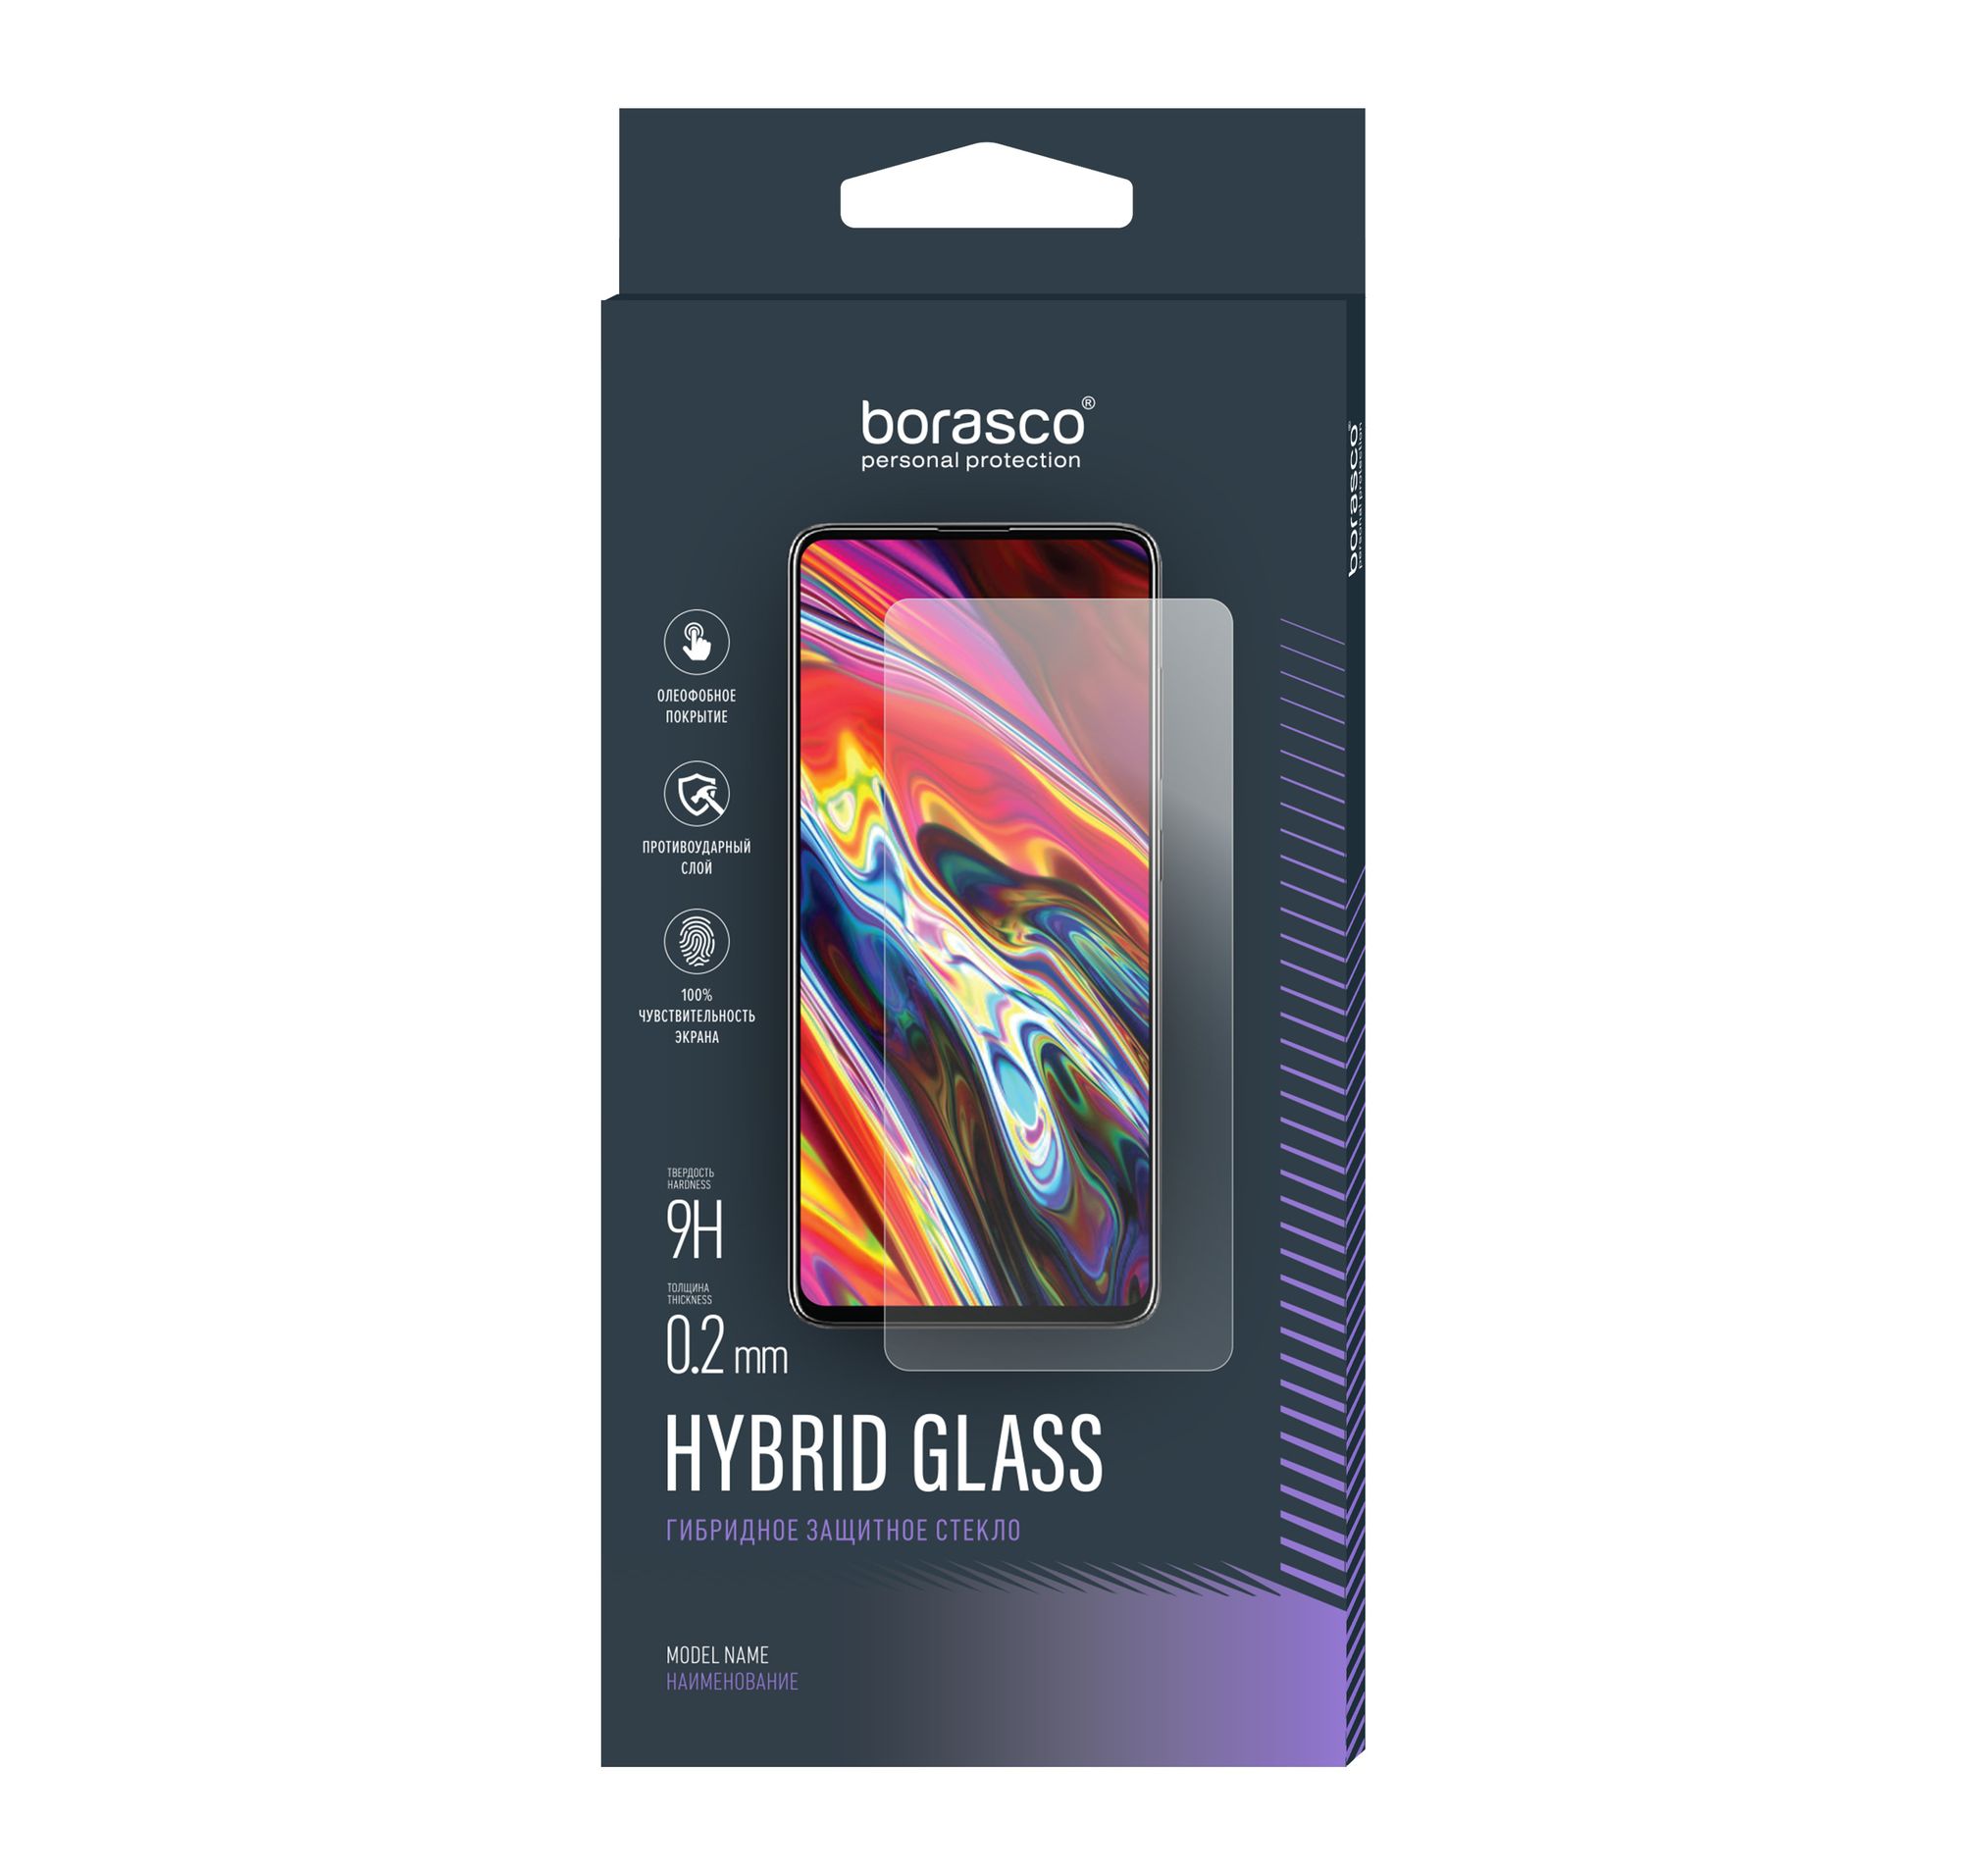 Стекло защитное Hybrid Glass VSP 0,26 мм для Samsung Galaxy A20/A30/A50 защитное стекло luxcase для samsung galaxy a20 a30 a30s a50 на самсунг гелакси а20 а30 а50 а30с на плоскую часть экрана 0 2 мм